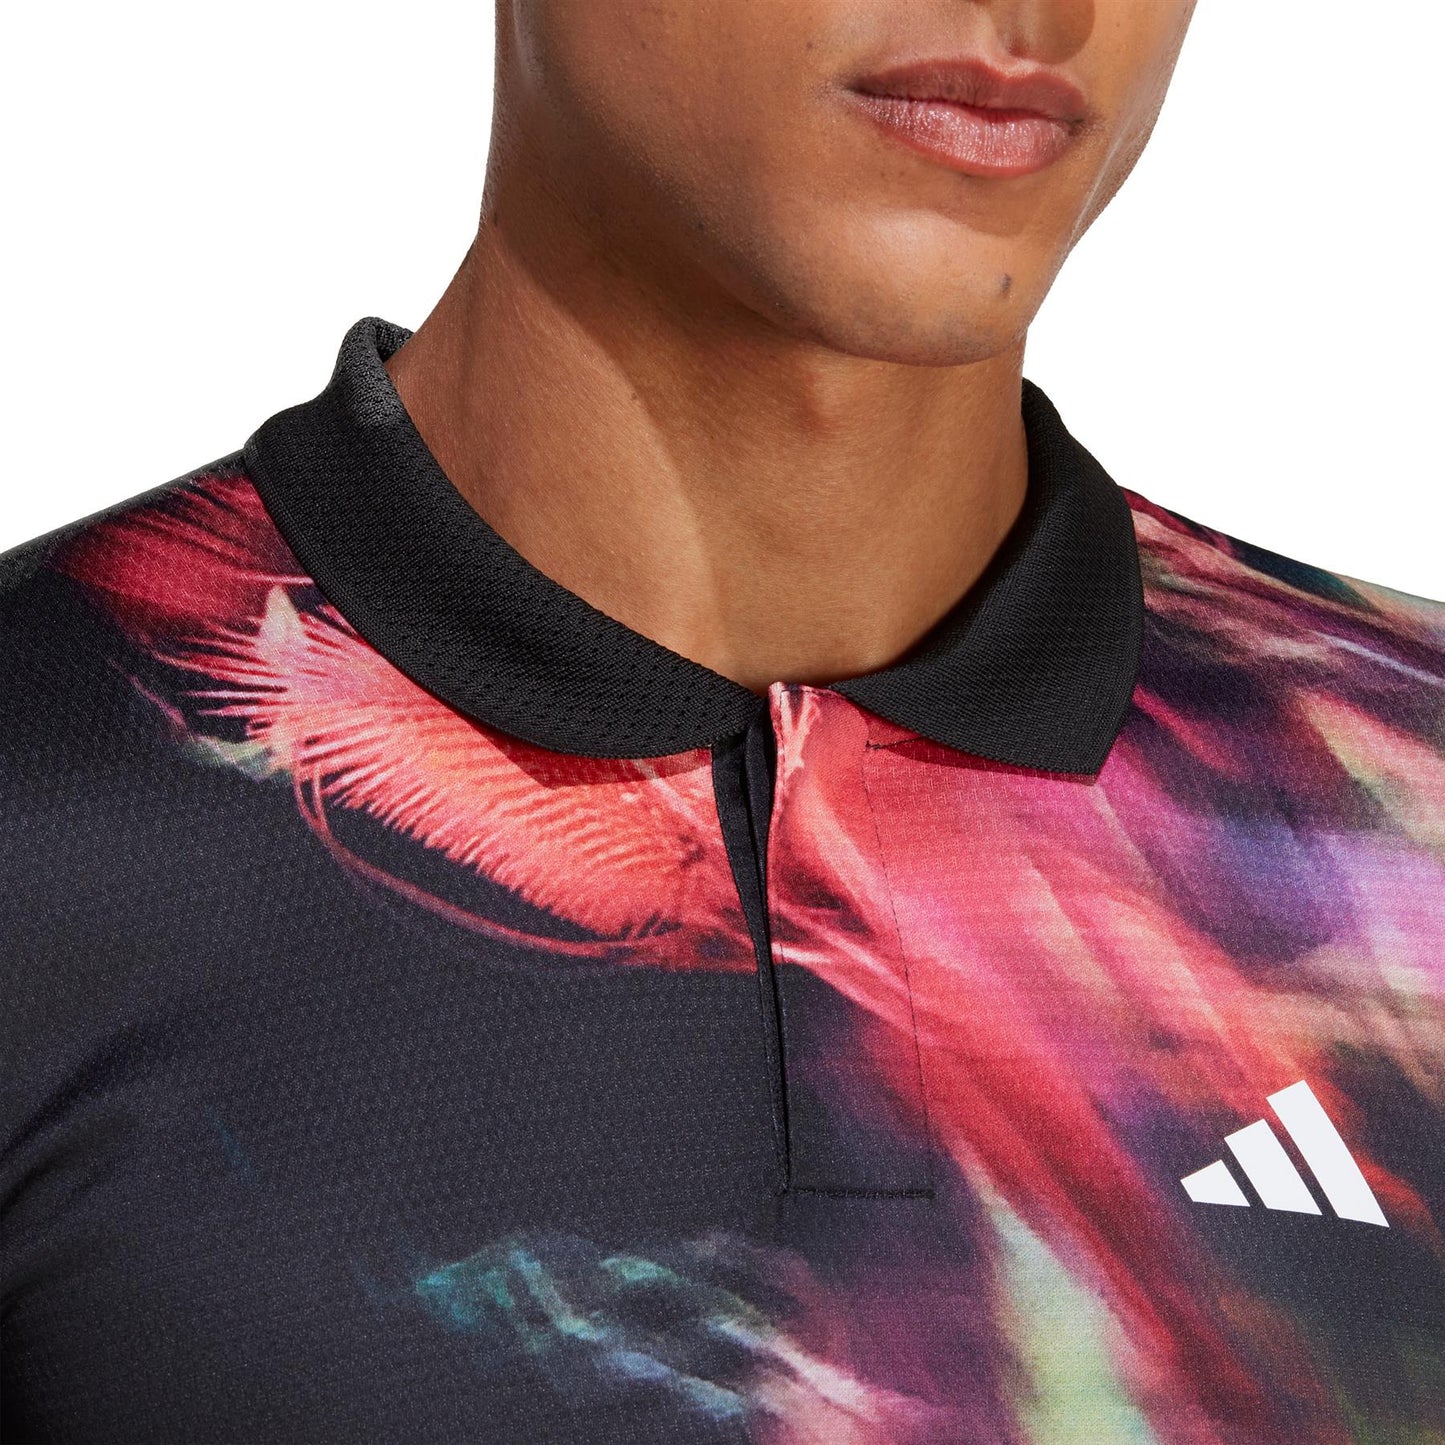 adidas Melbourne Mens Freelift Tennis Polo Shirt - Black / Multi